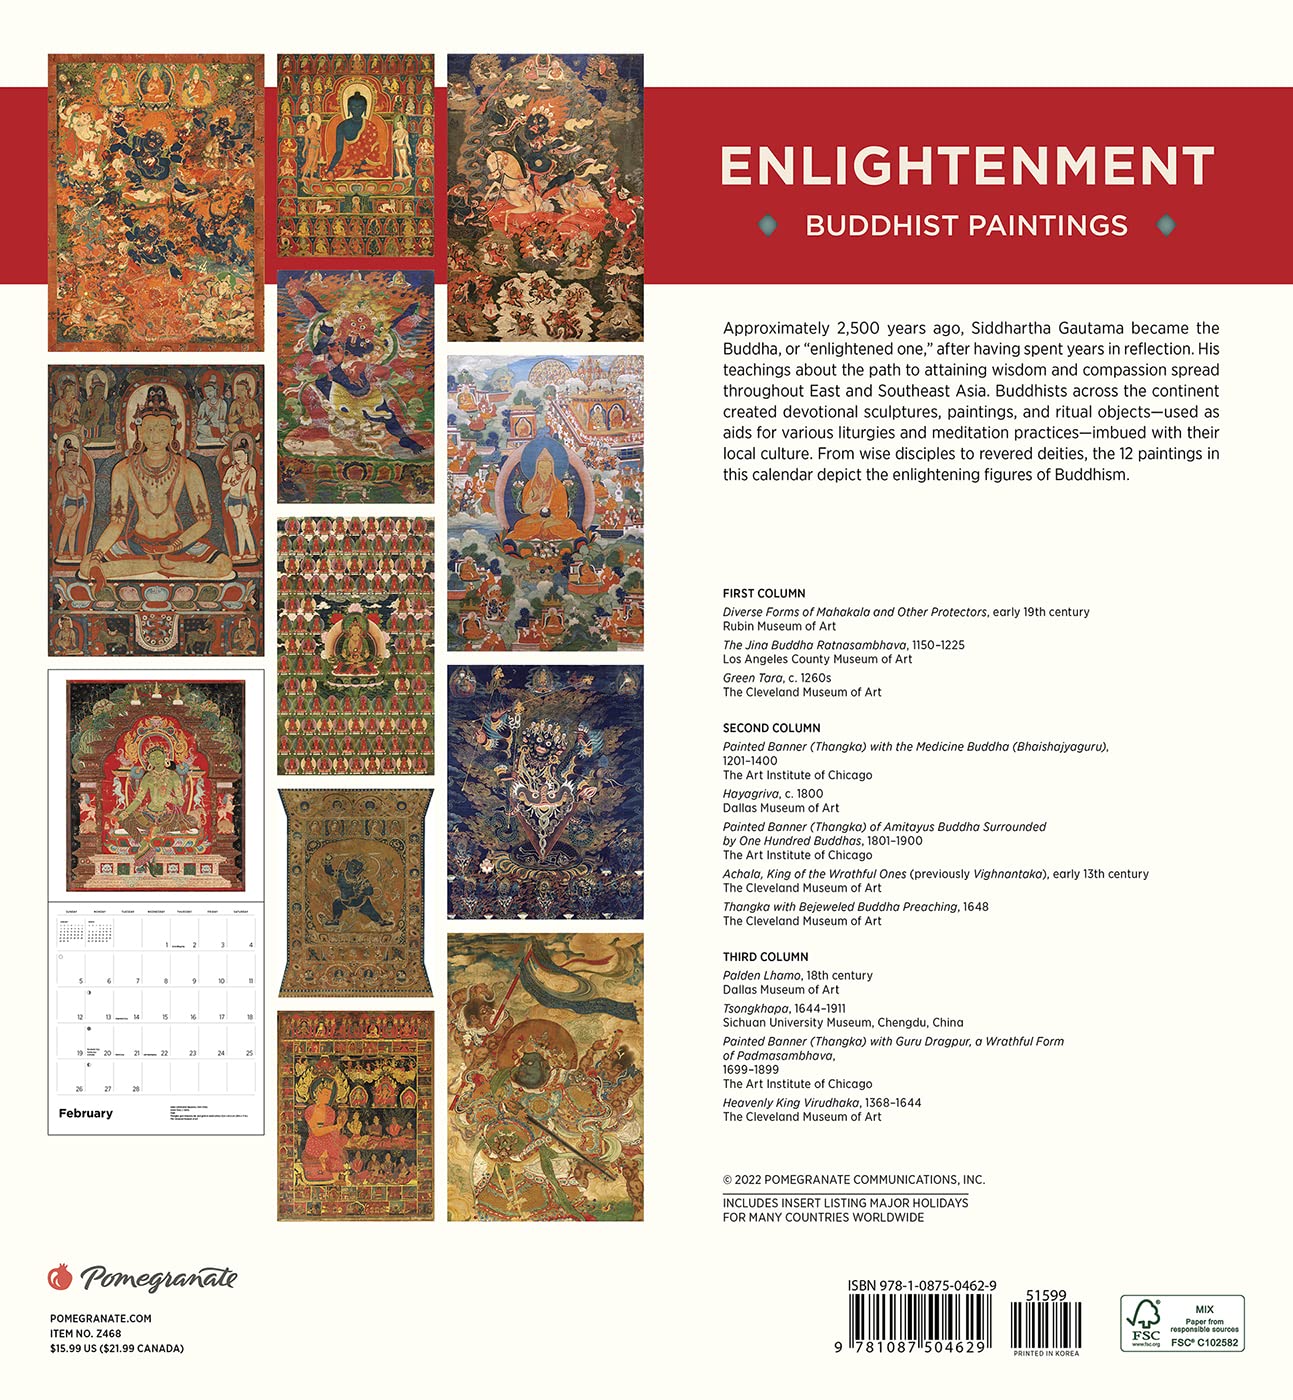 Buddhist Paintings Calendar 2022